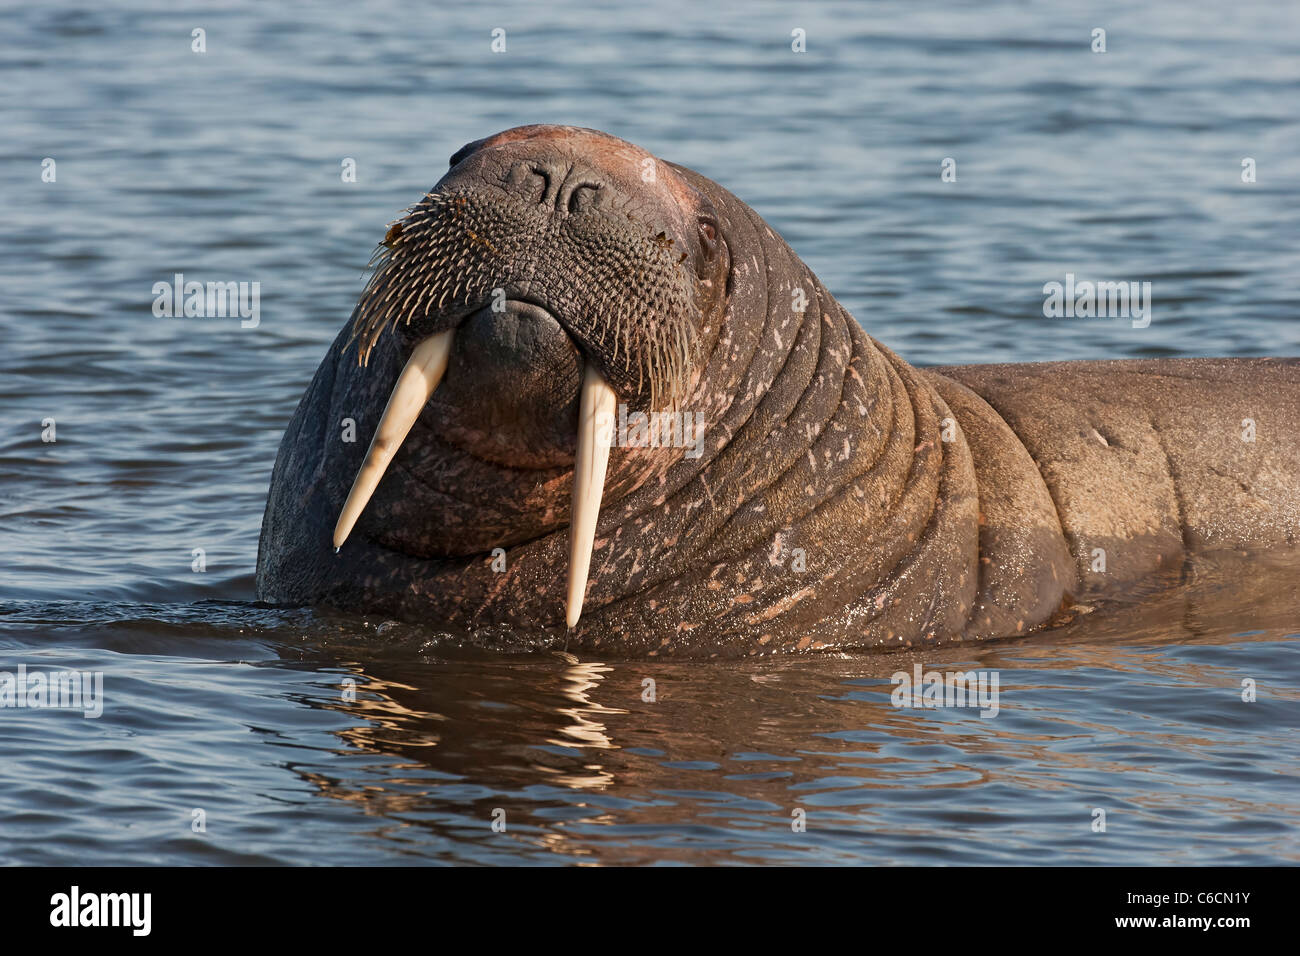 Walrus Odobenus Rosmarus Large Male In Sea Close Up Of Head Showing